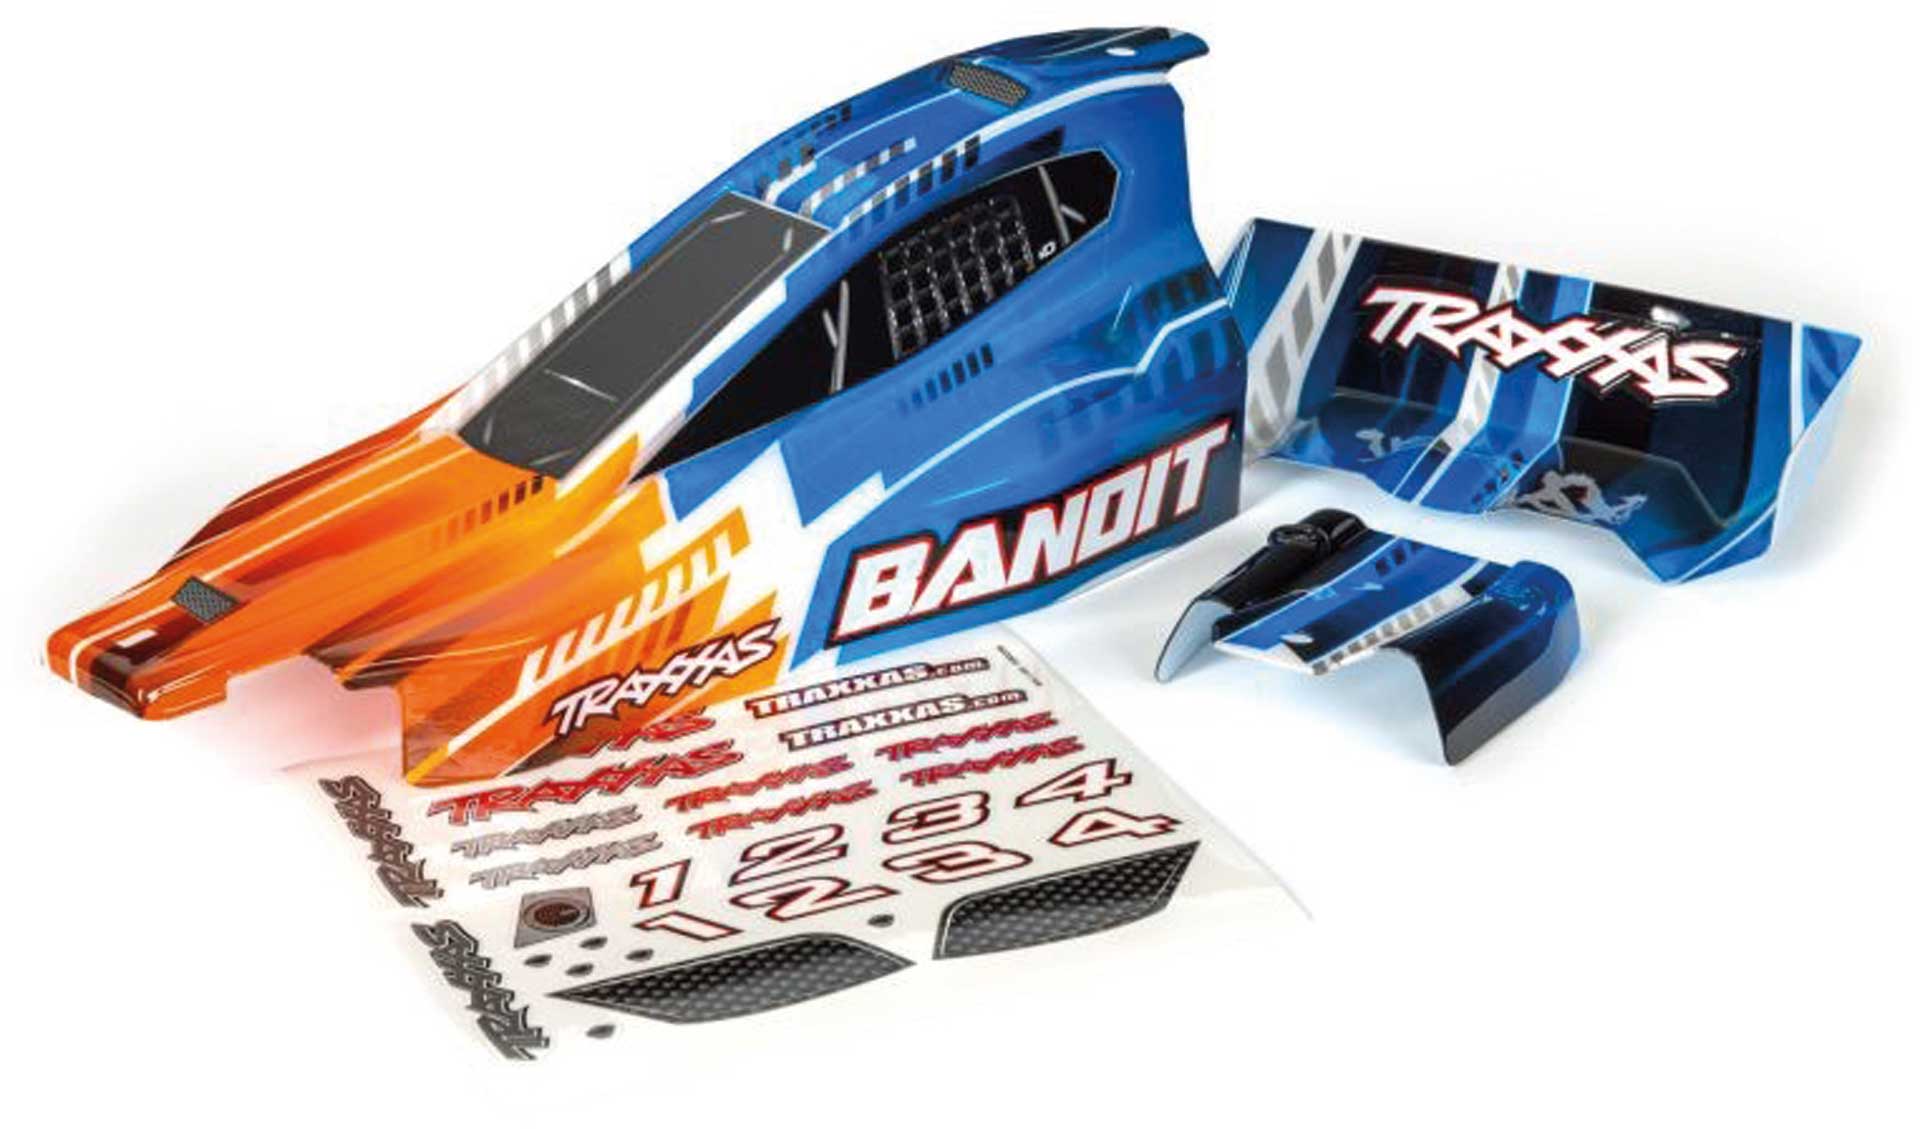 TRAXXAS Karosserie Bandit / VXL Orange/Blau lackiert inkl. Heckflügel